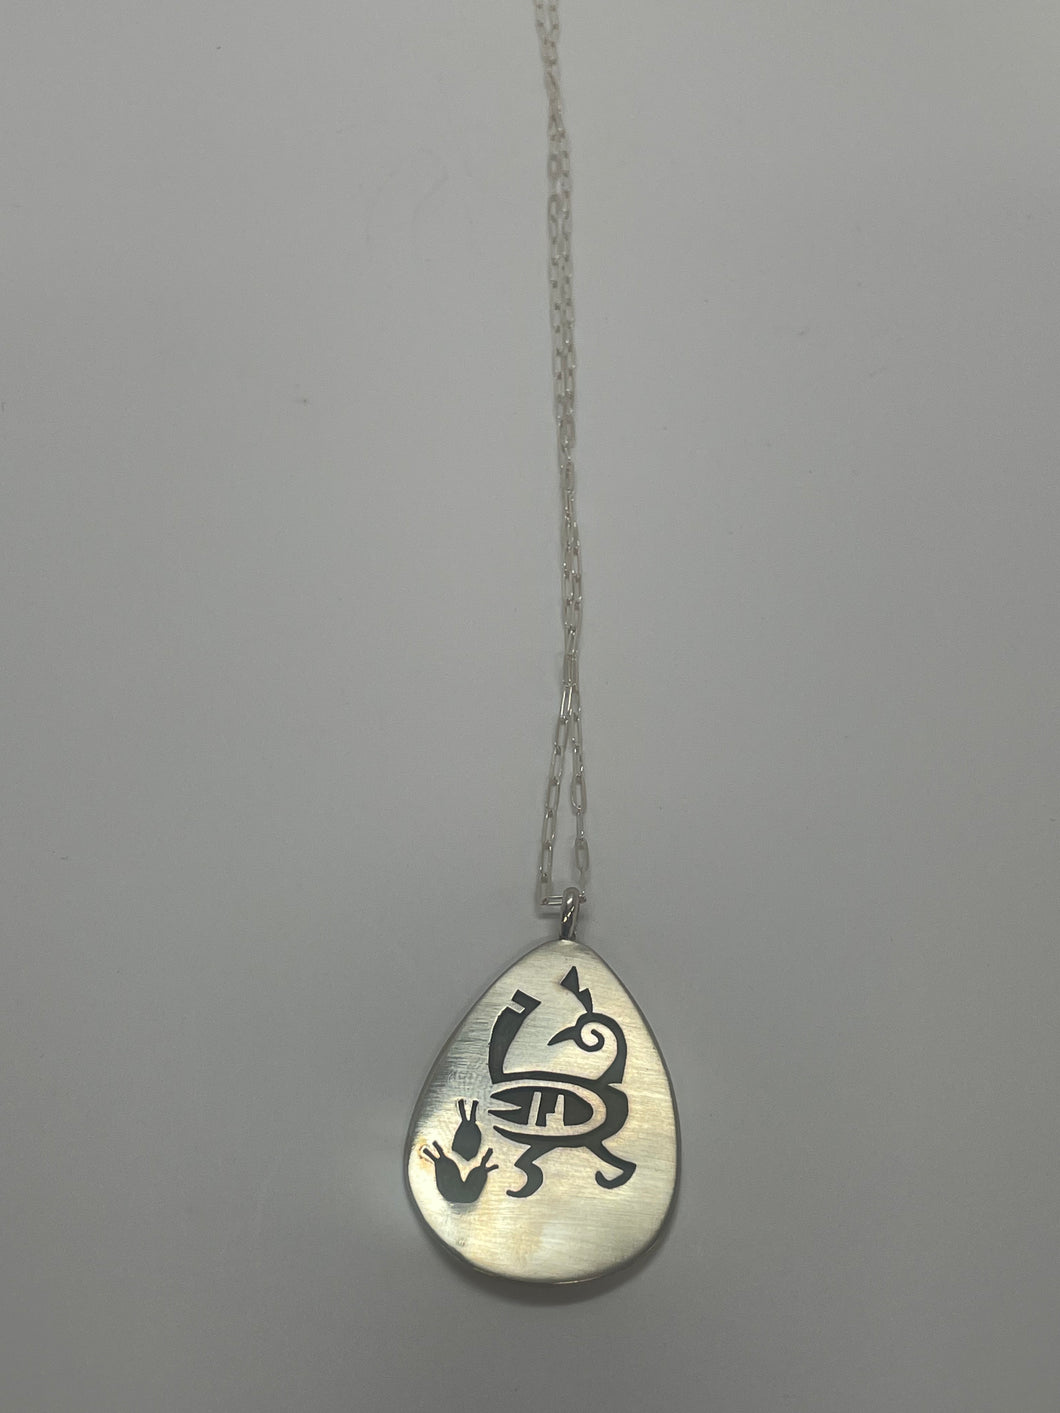 Hopi chain and bird pendant